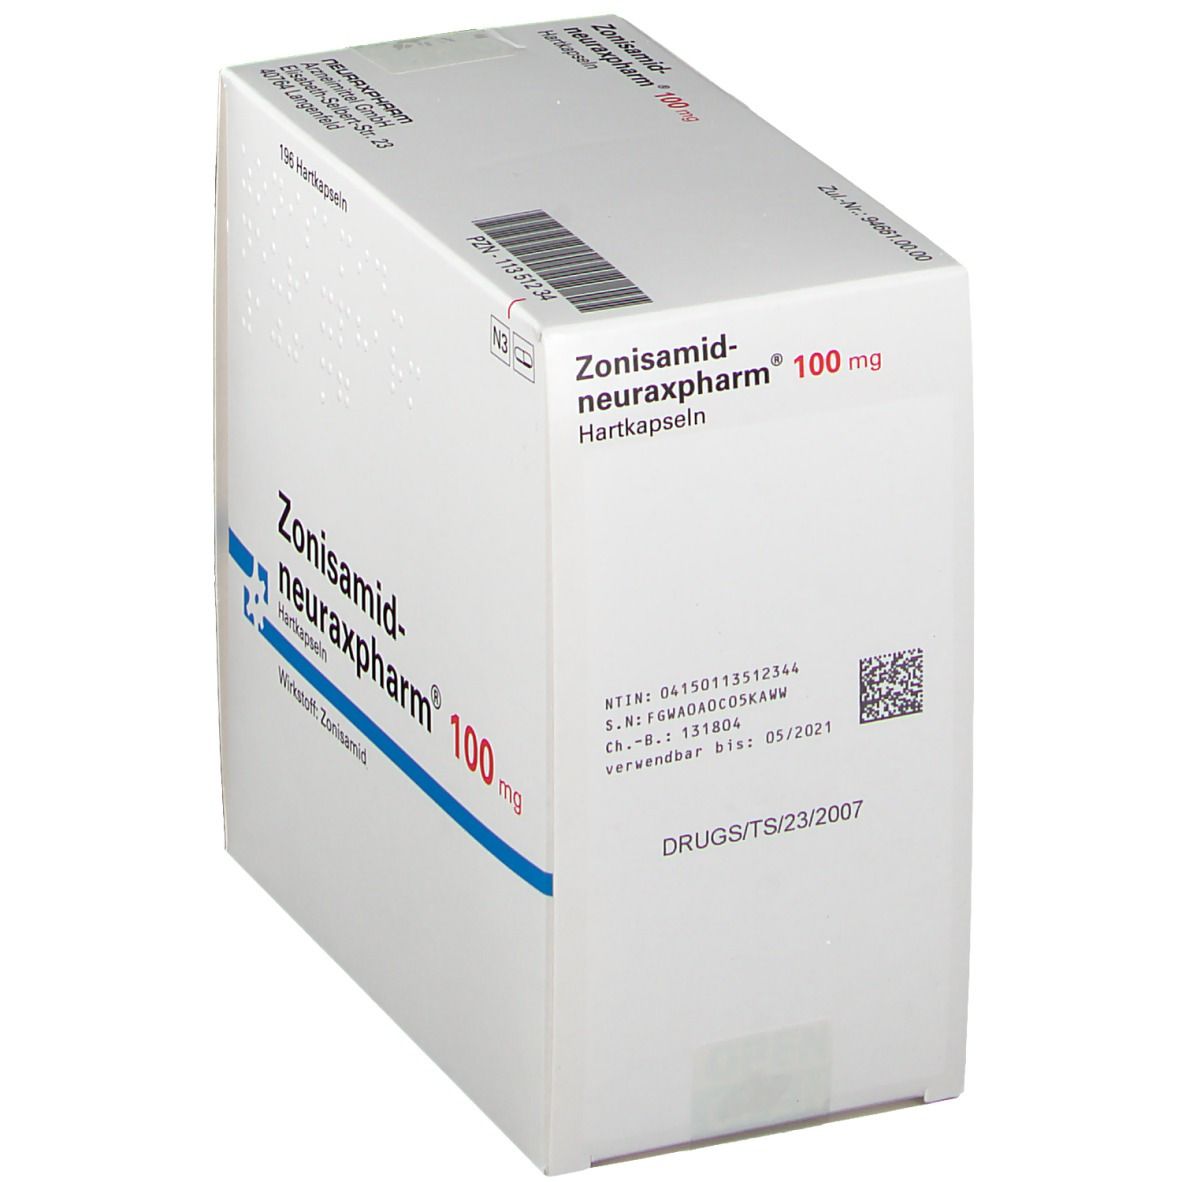 Zonisamid-neuraxpharm® 100 mg